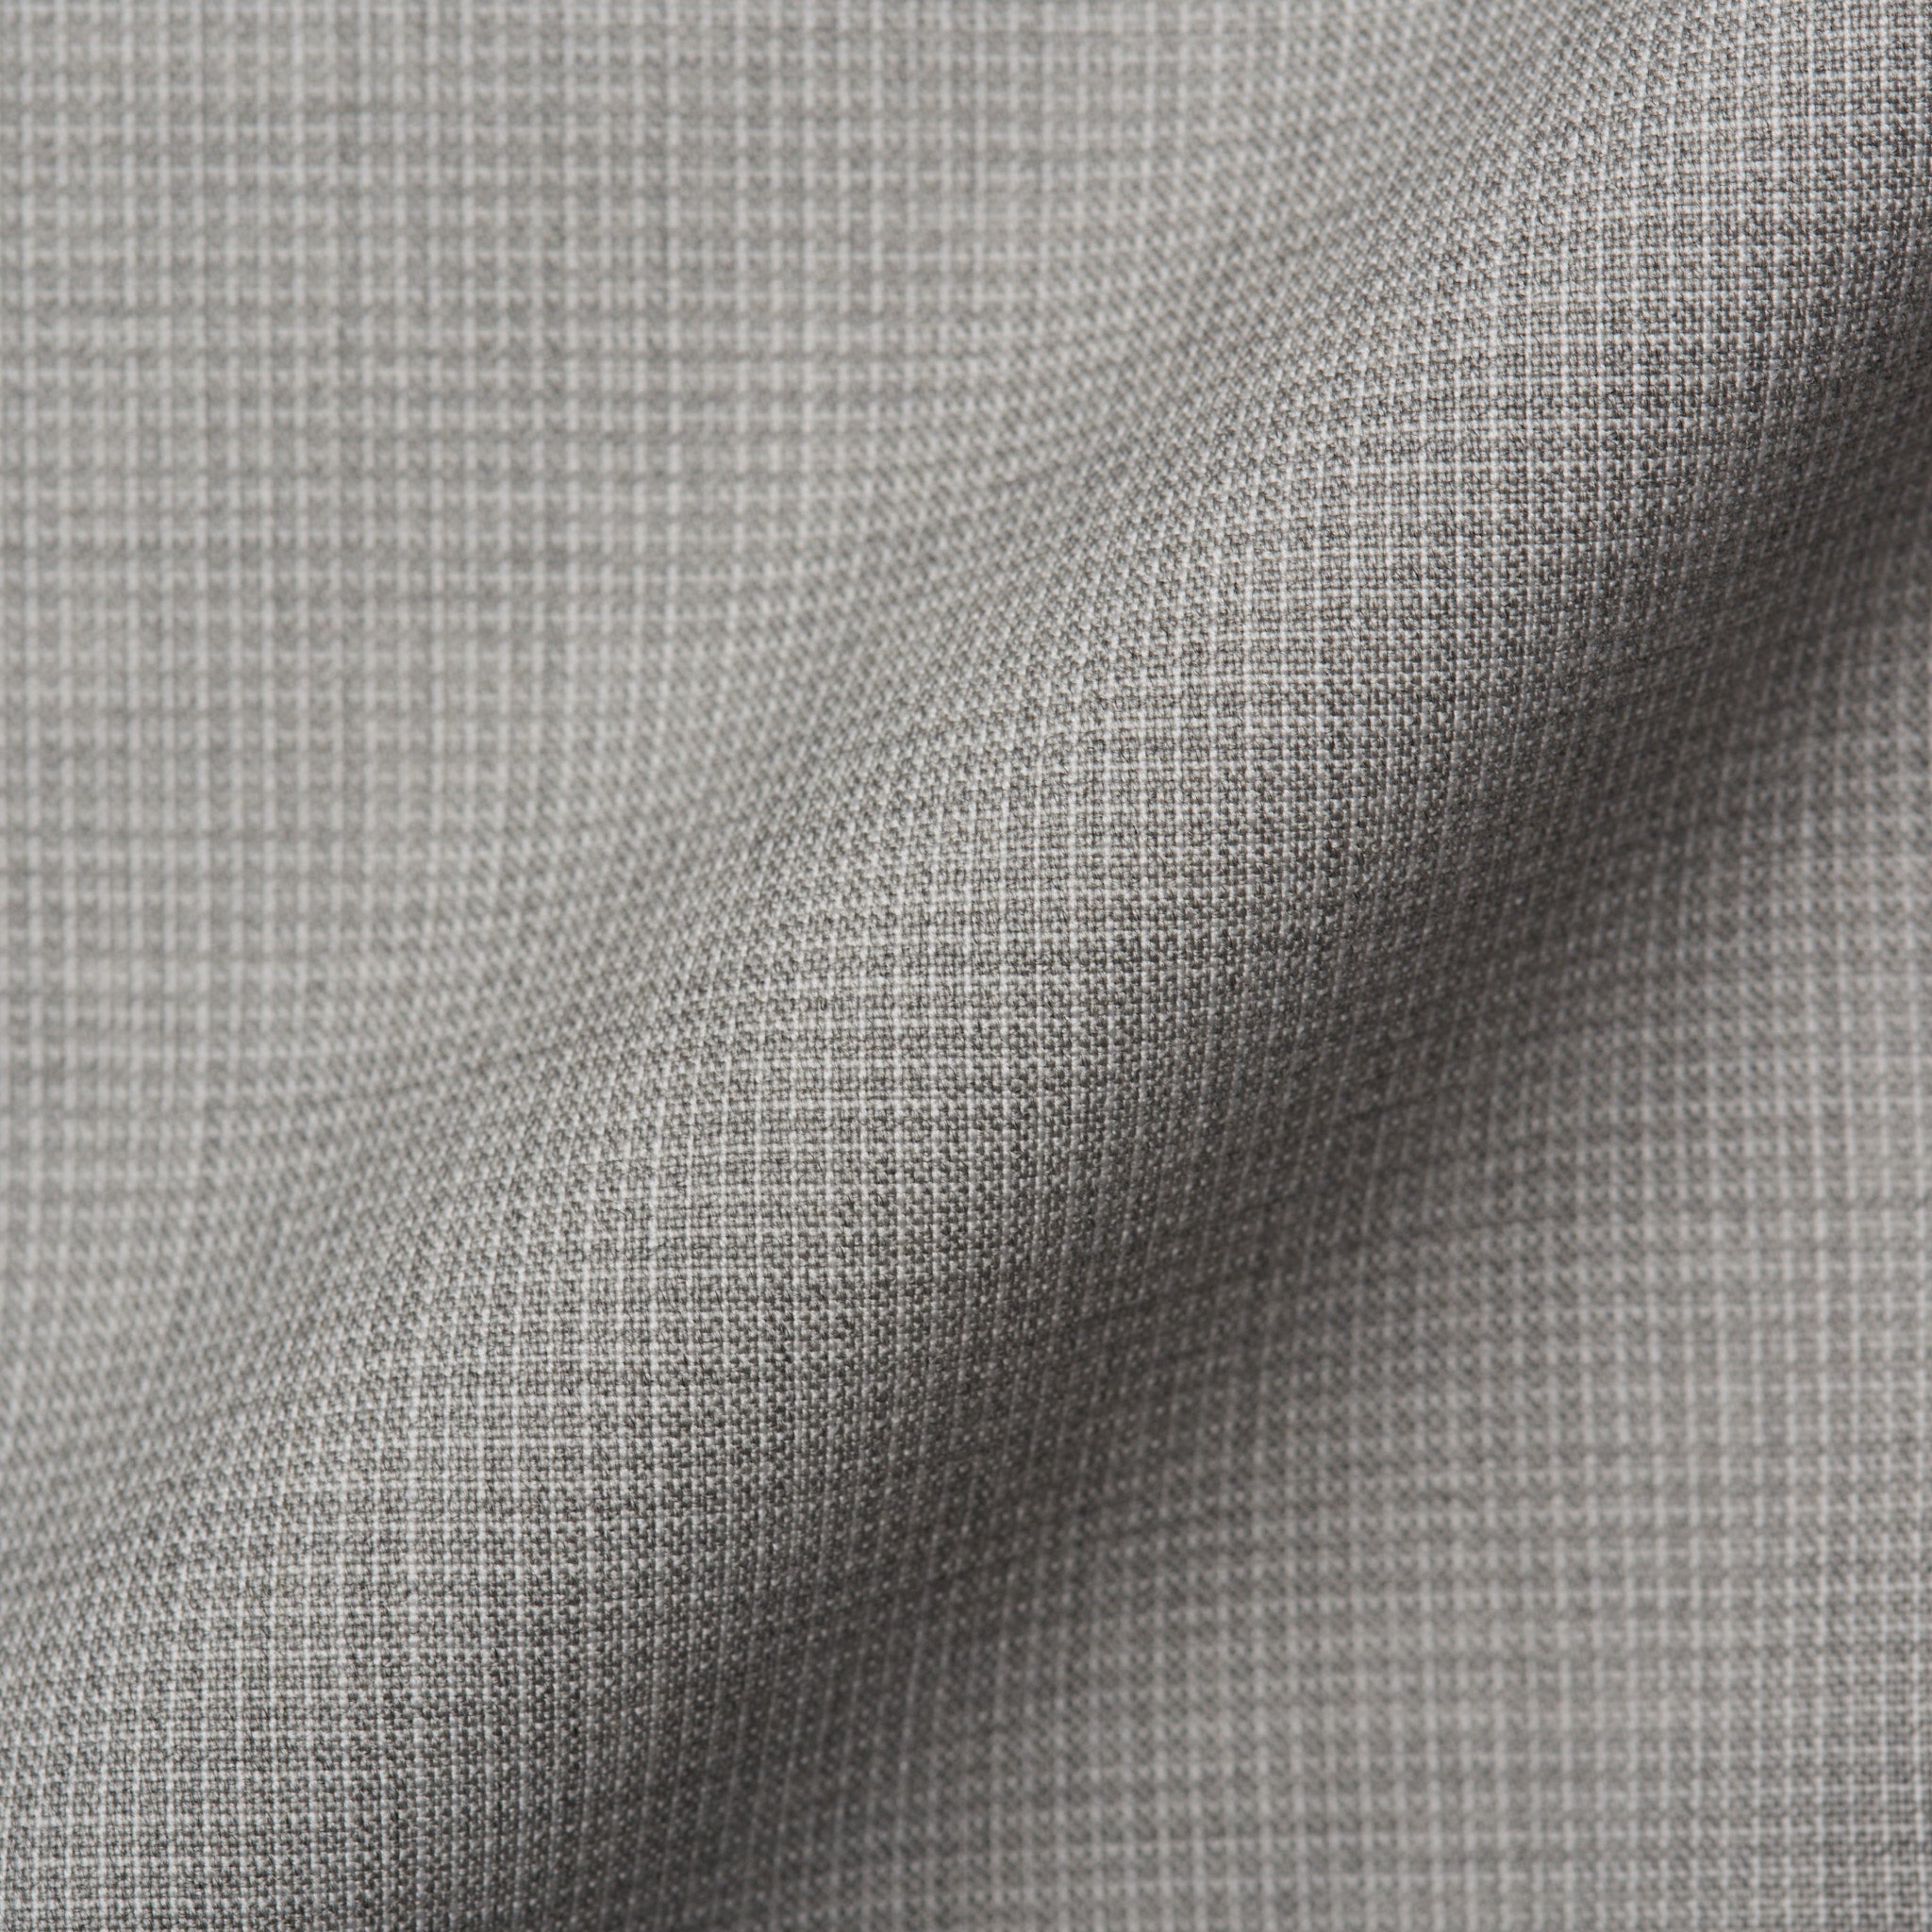 D'AVENZA Handmade Gray Wool Business Suit EU 56 NEW US 46